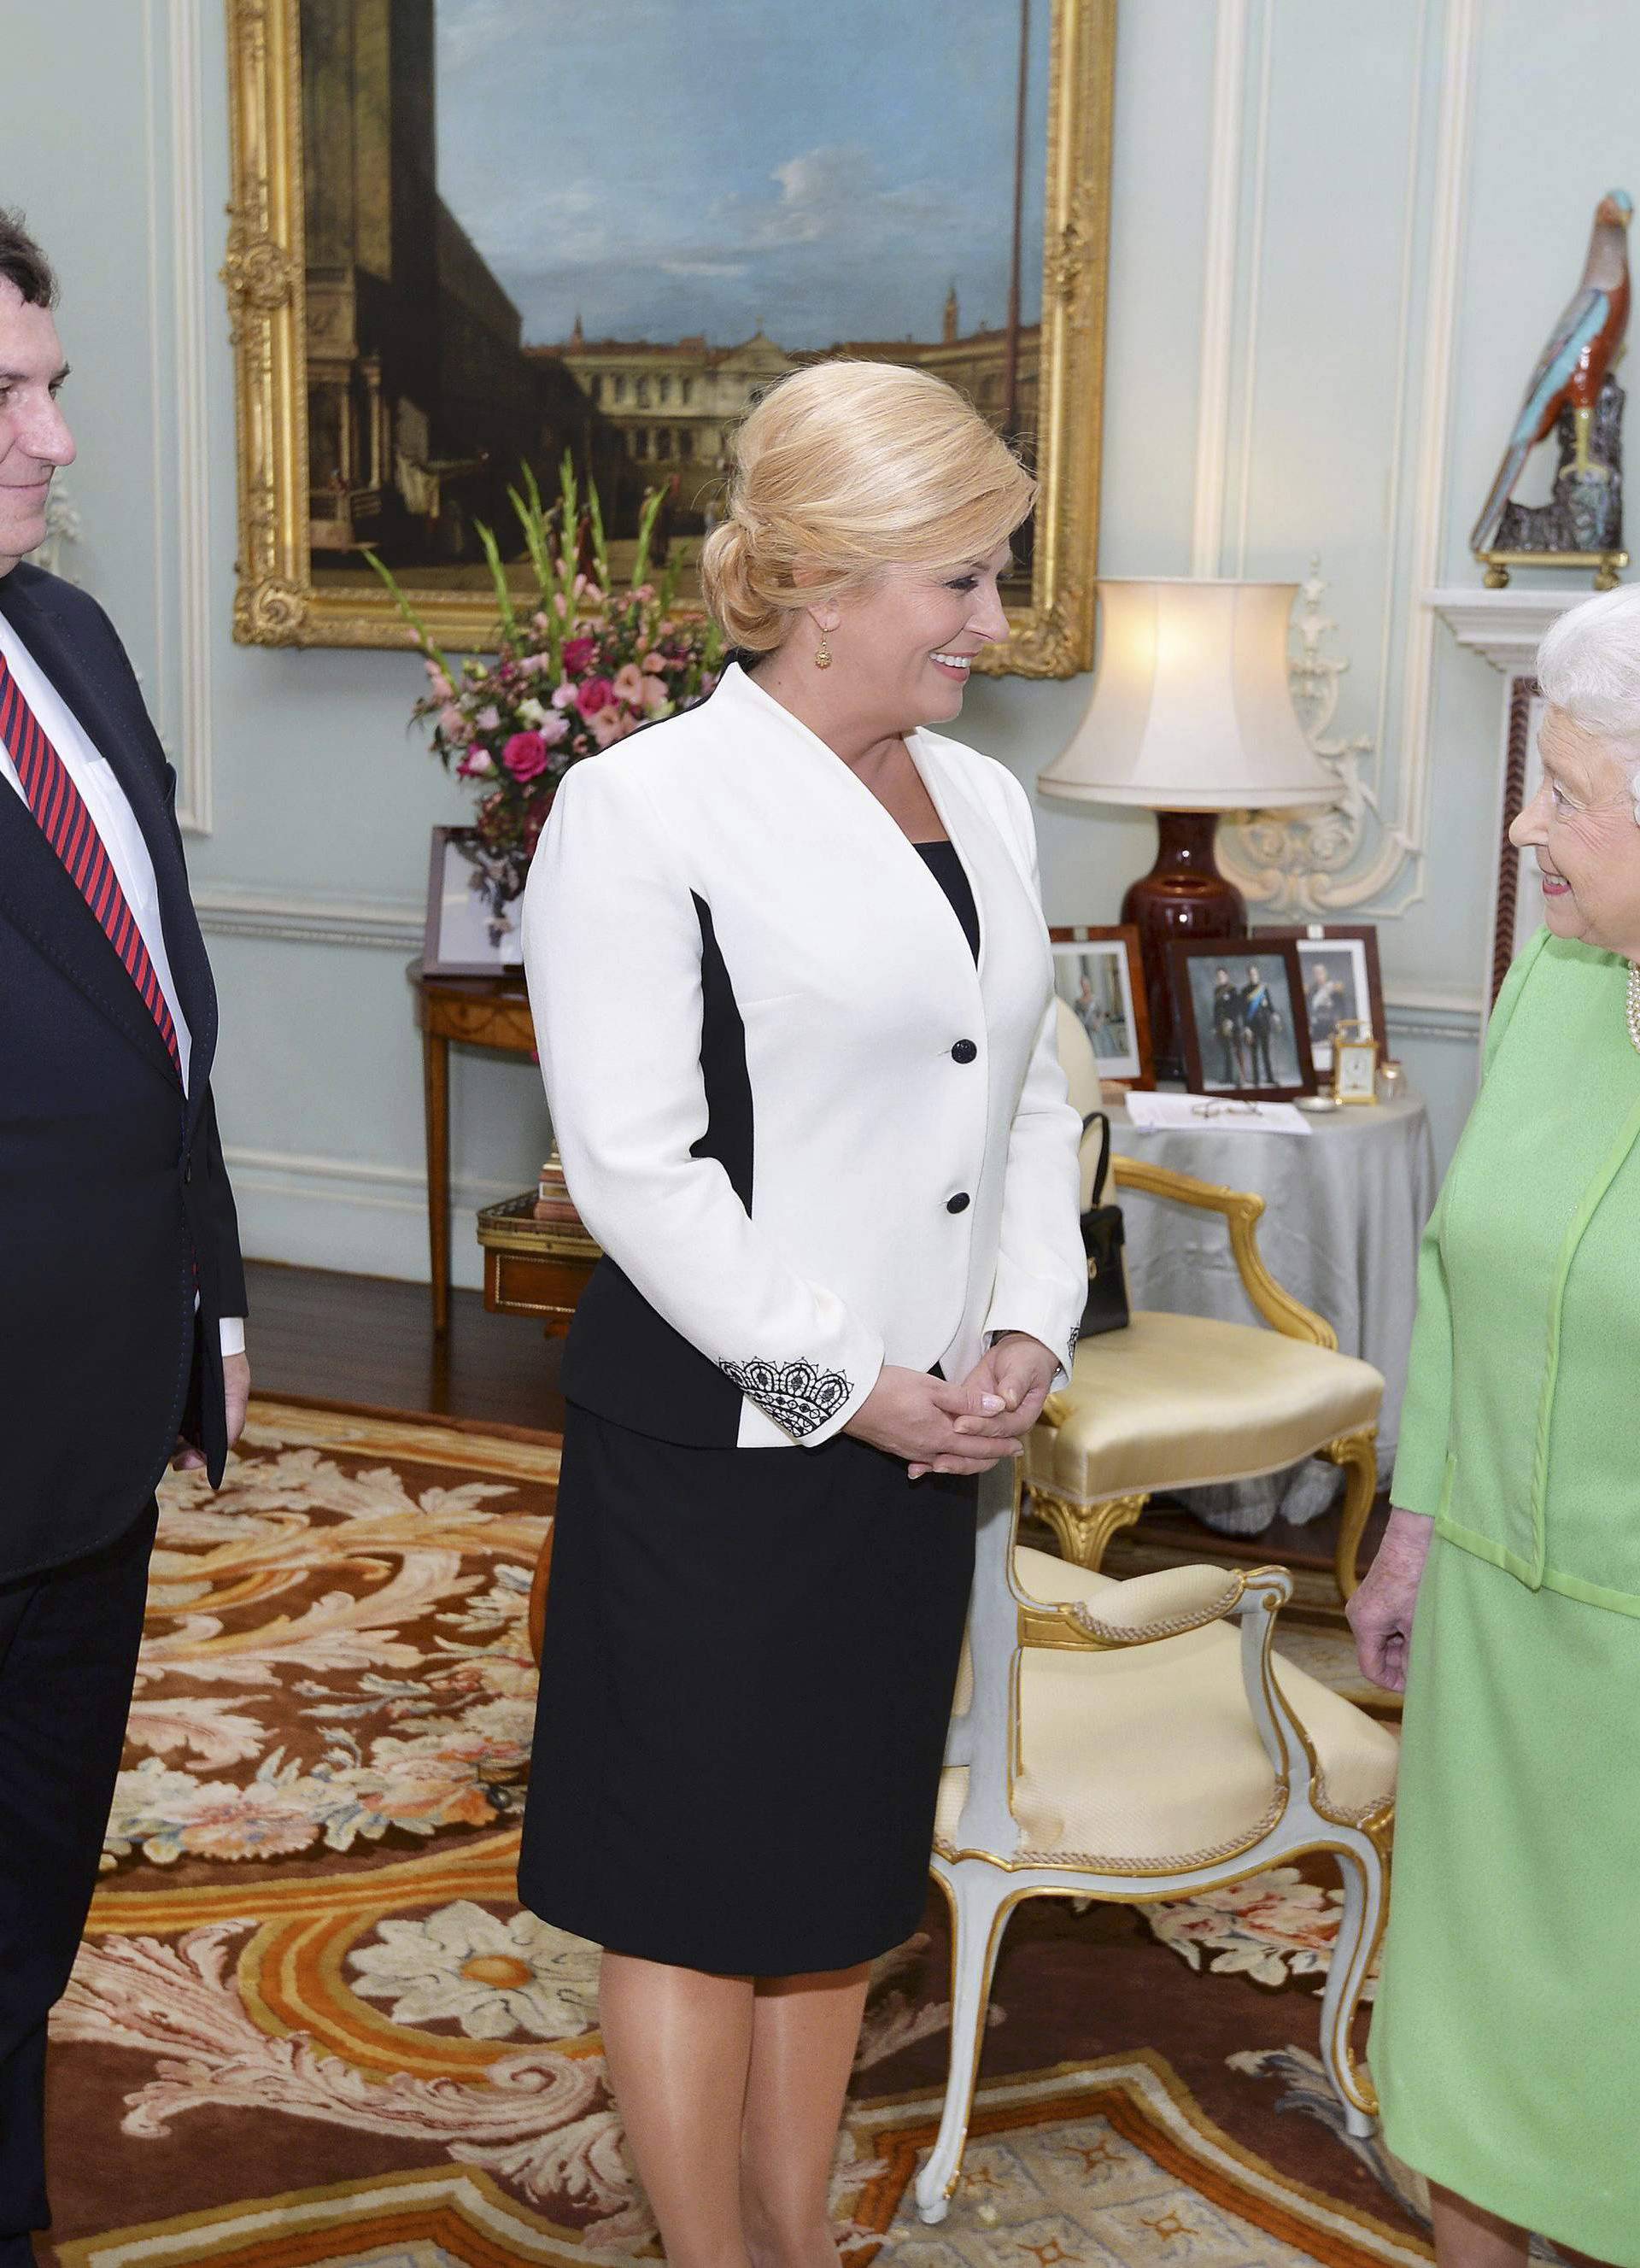 Queen Elizabeth greets the President of Croatia Kolinda Grabar-Kitarovic and her husband Jakov at Buckingham Palace in London